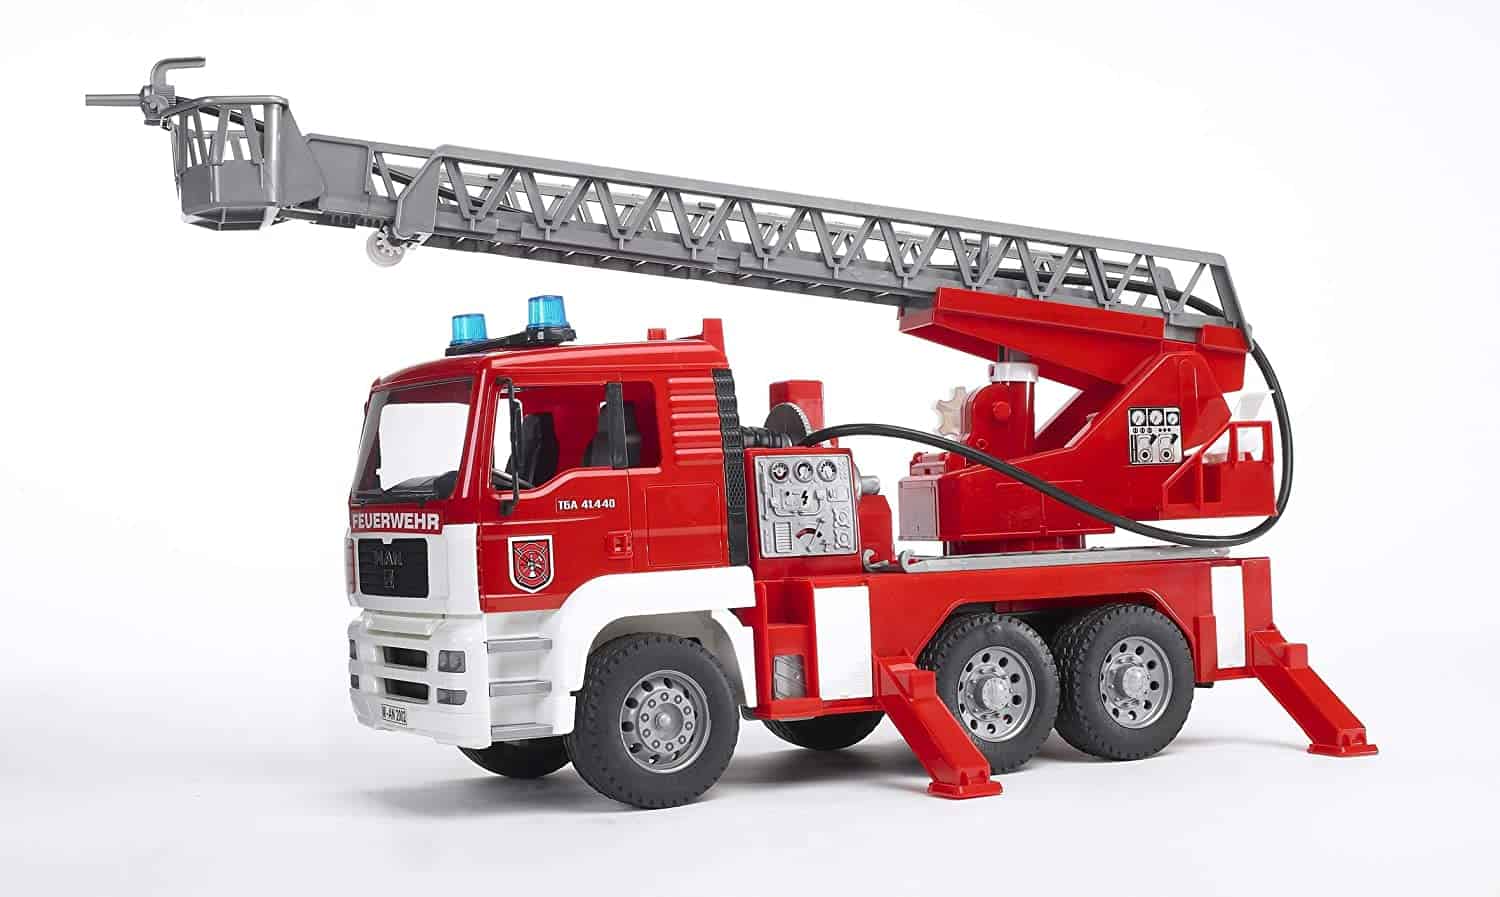 Best fire truck: Bruder 02771 MAN with Water Pump